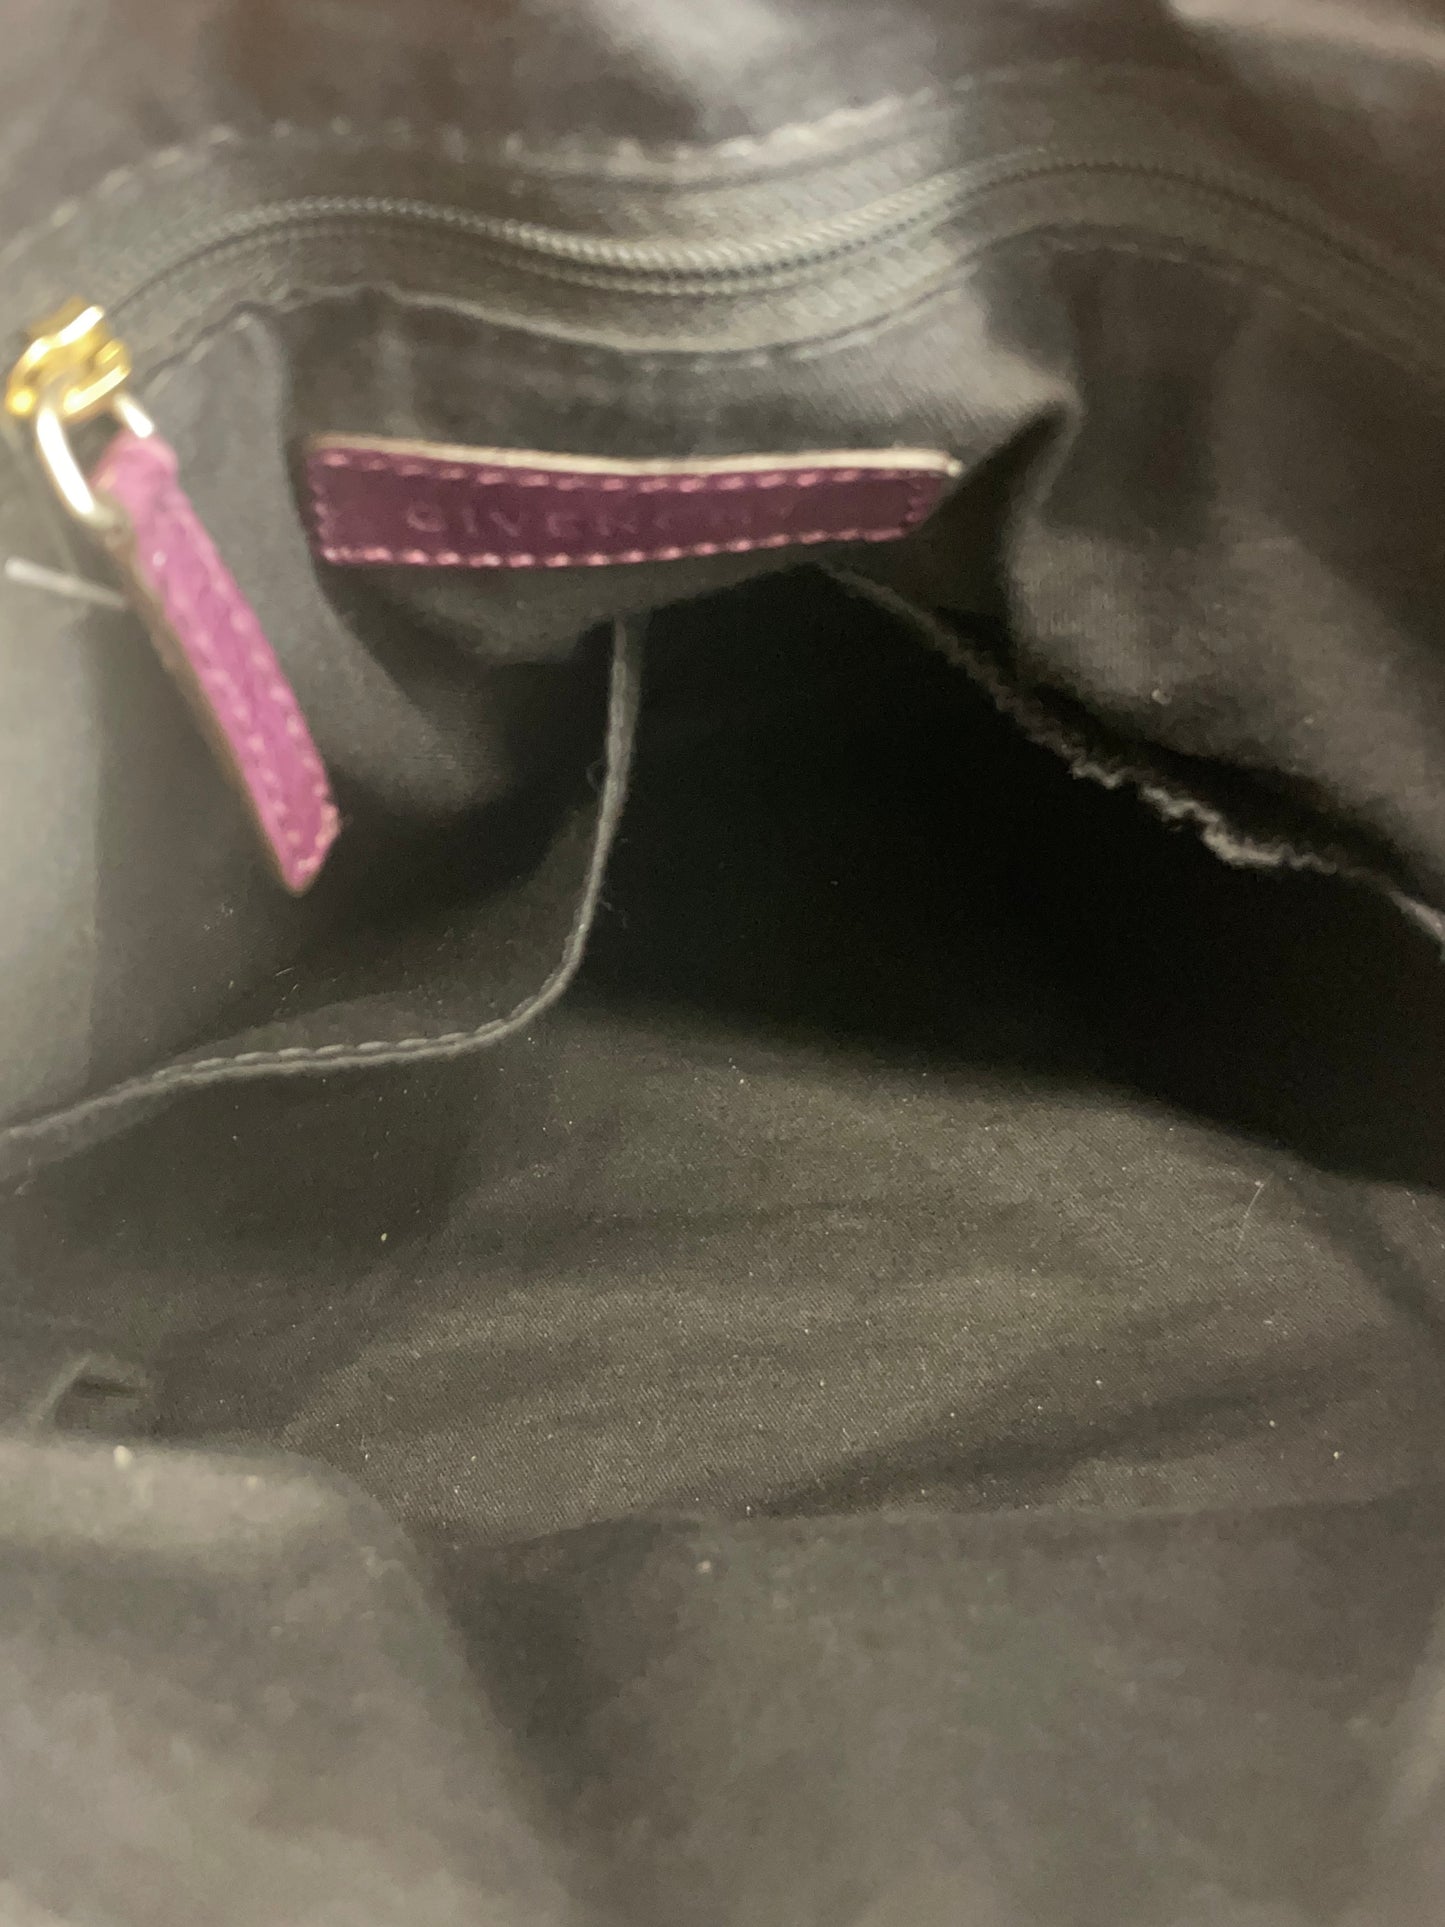 Givenchy Pandora Purple Patent Leather Bag